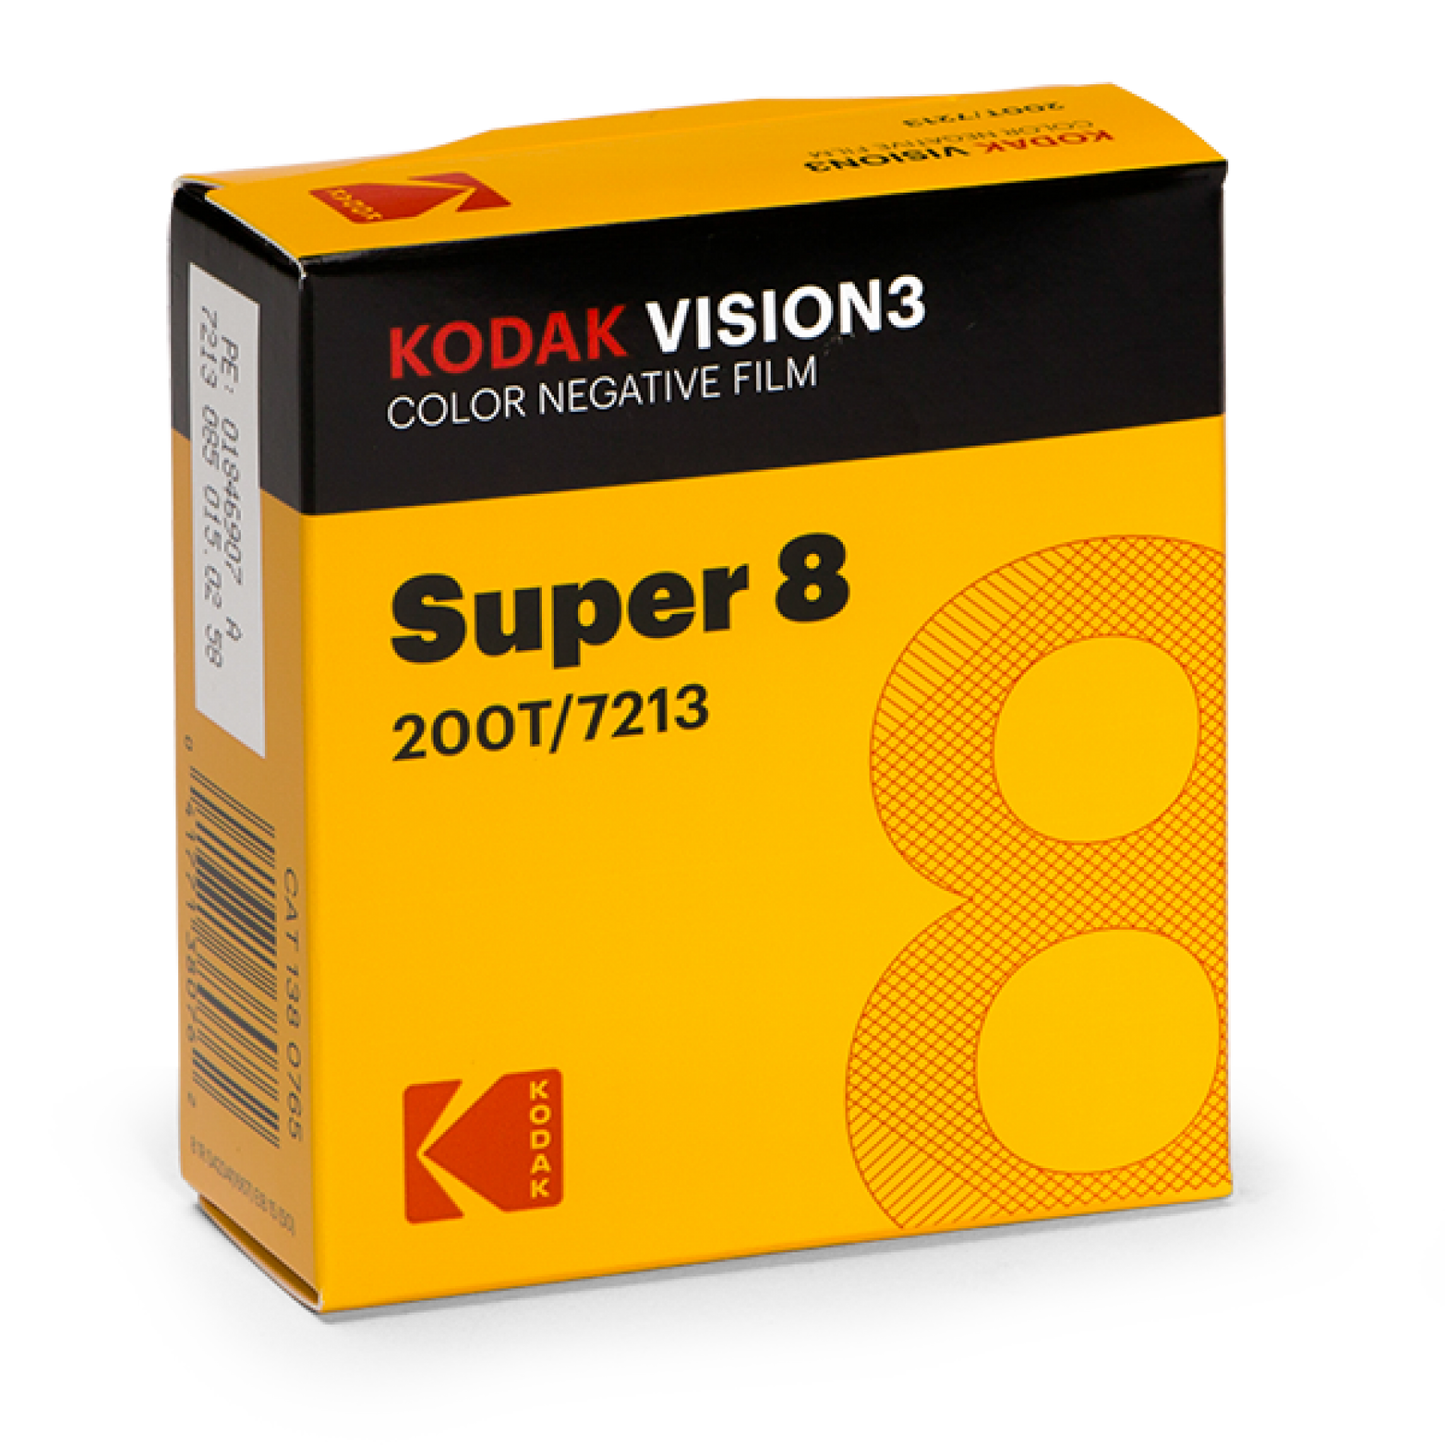 Film Kodak Vision3 super 8 - 200T/7213